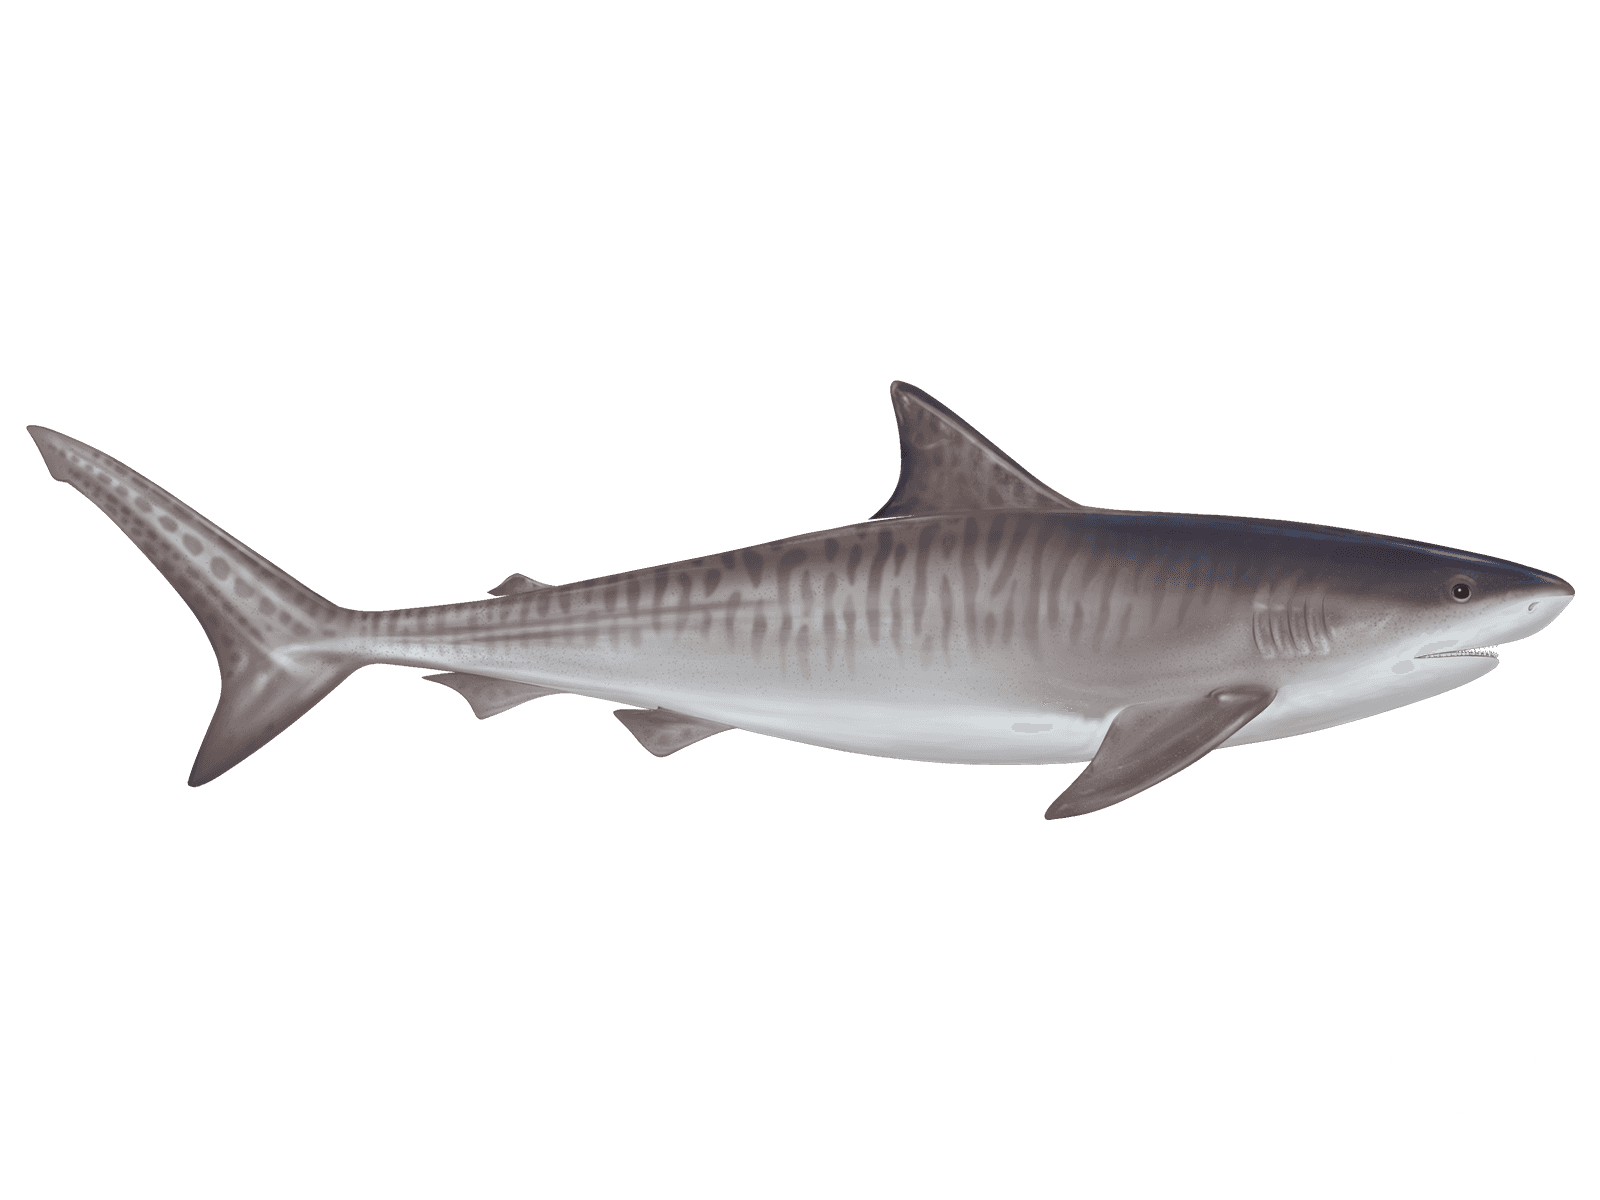  Tiger Shark Facts and Information - Galeocerdo